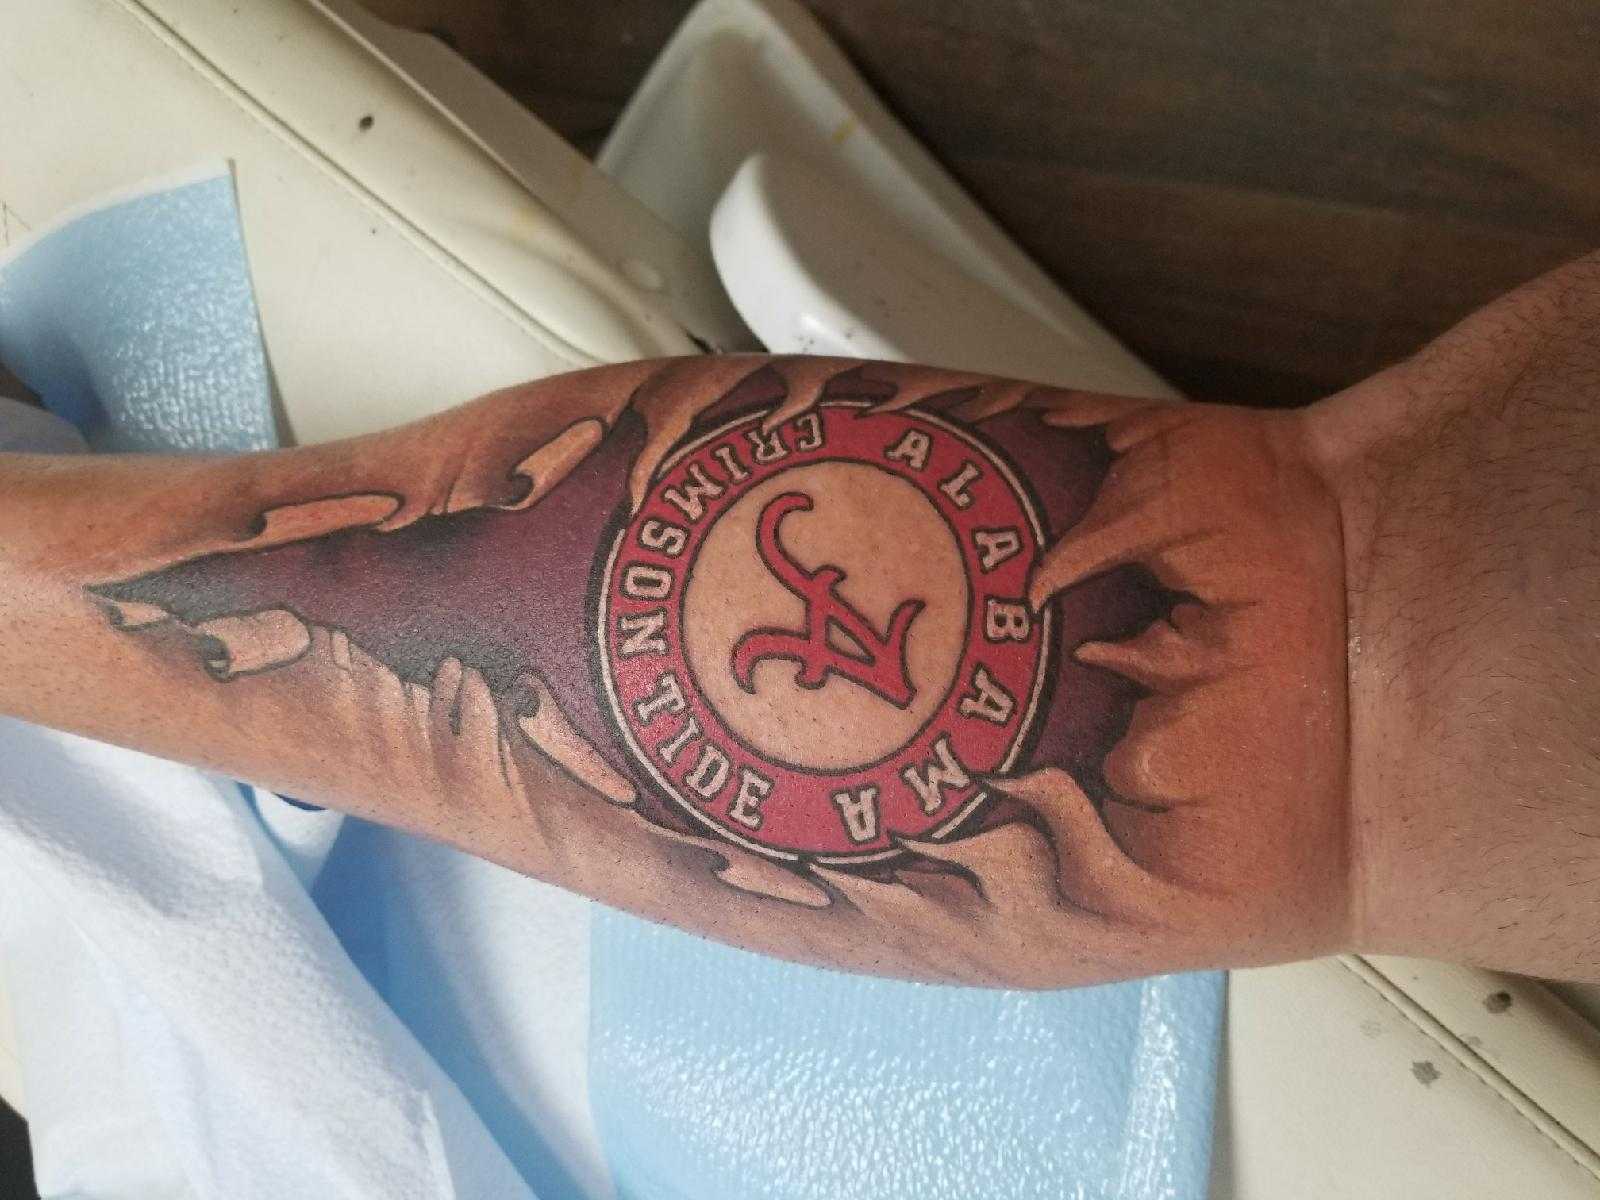 He Bleeds Crimson Alabama fan gets crazy calf tattoo photos